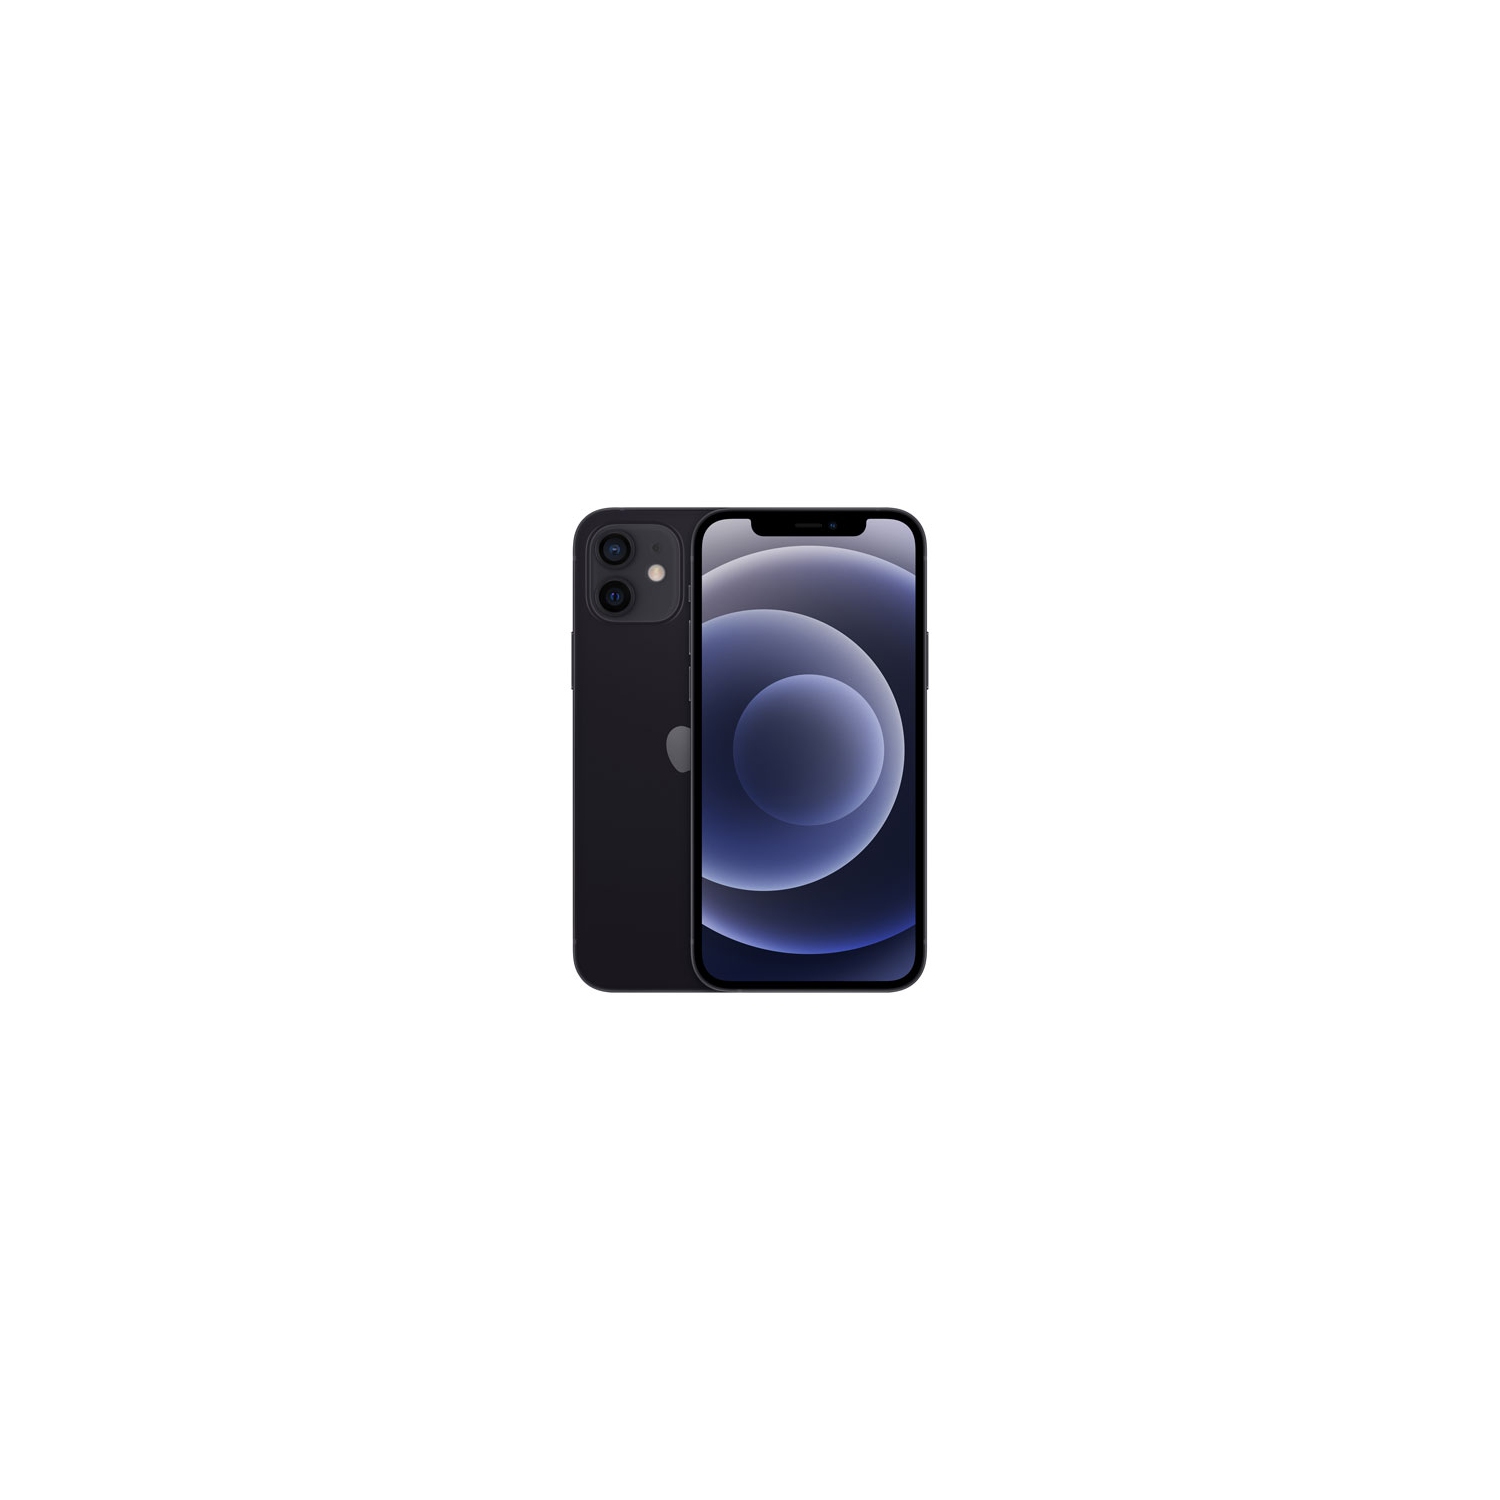 Apple iPhone 12 64GB Smartphone - Black - Unlocked - Open Box